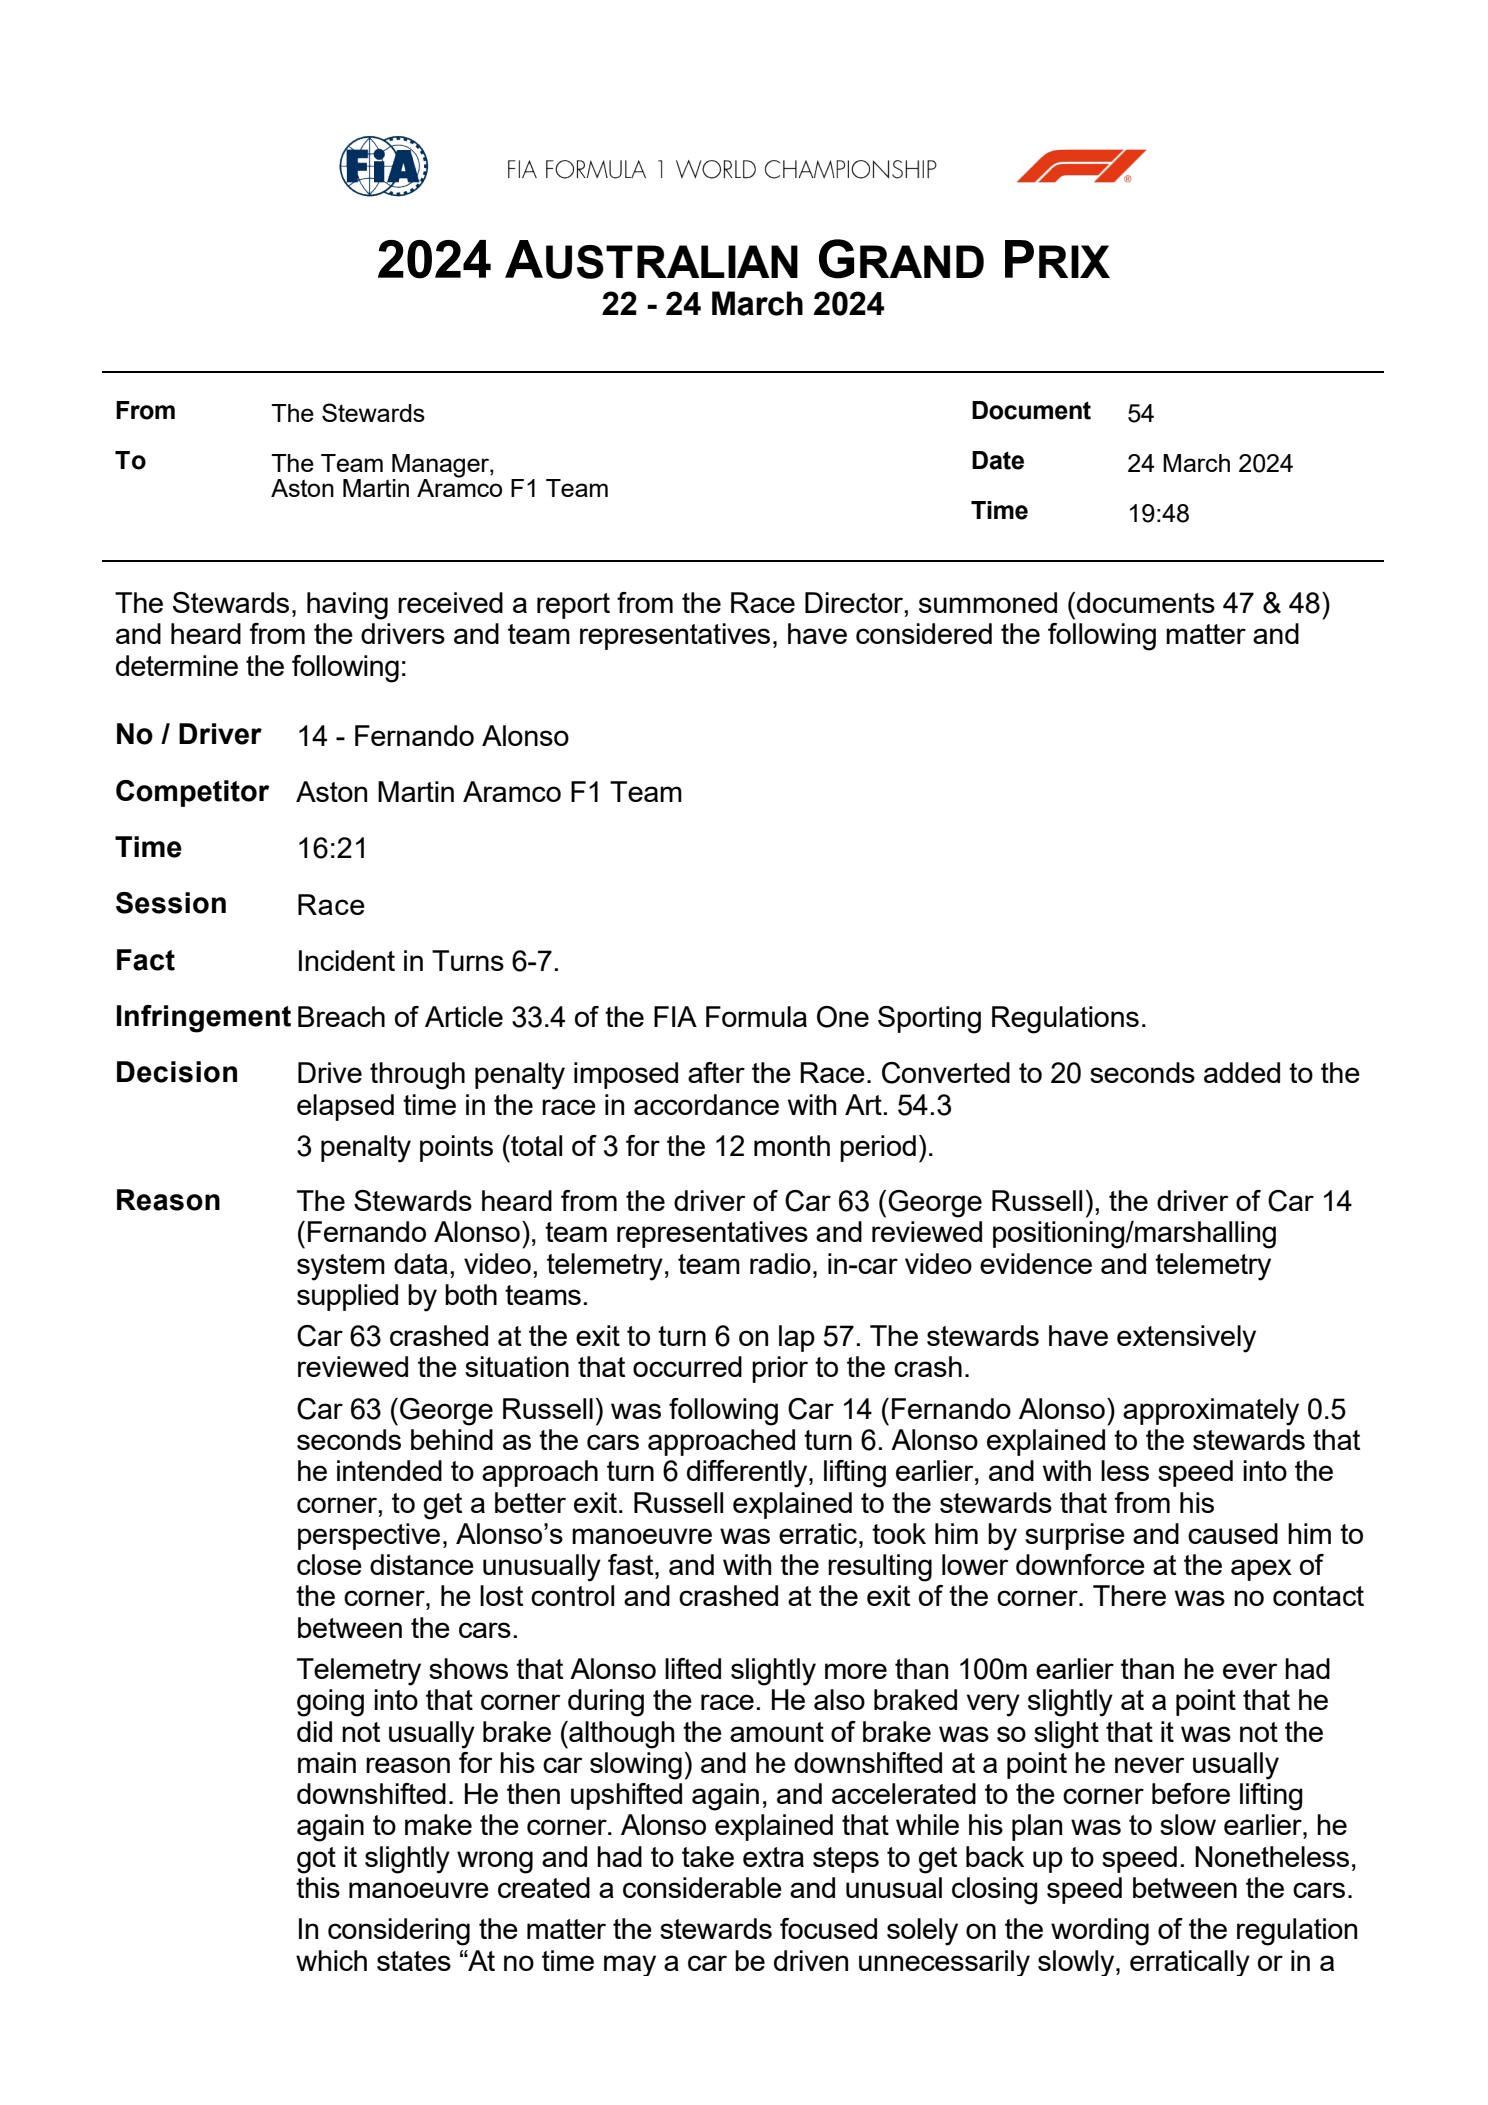 BREAKING: Stewards delen loodzware straf uit aan Fernando Alonso na crash George Russell